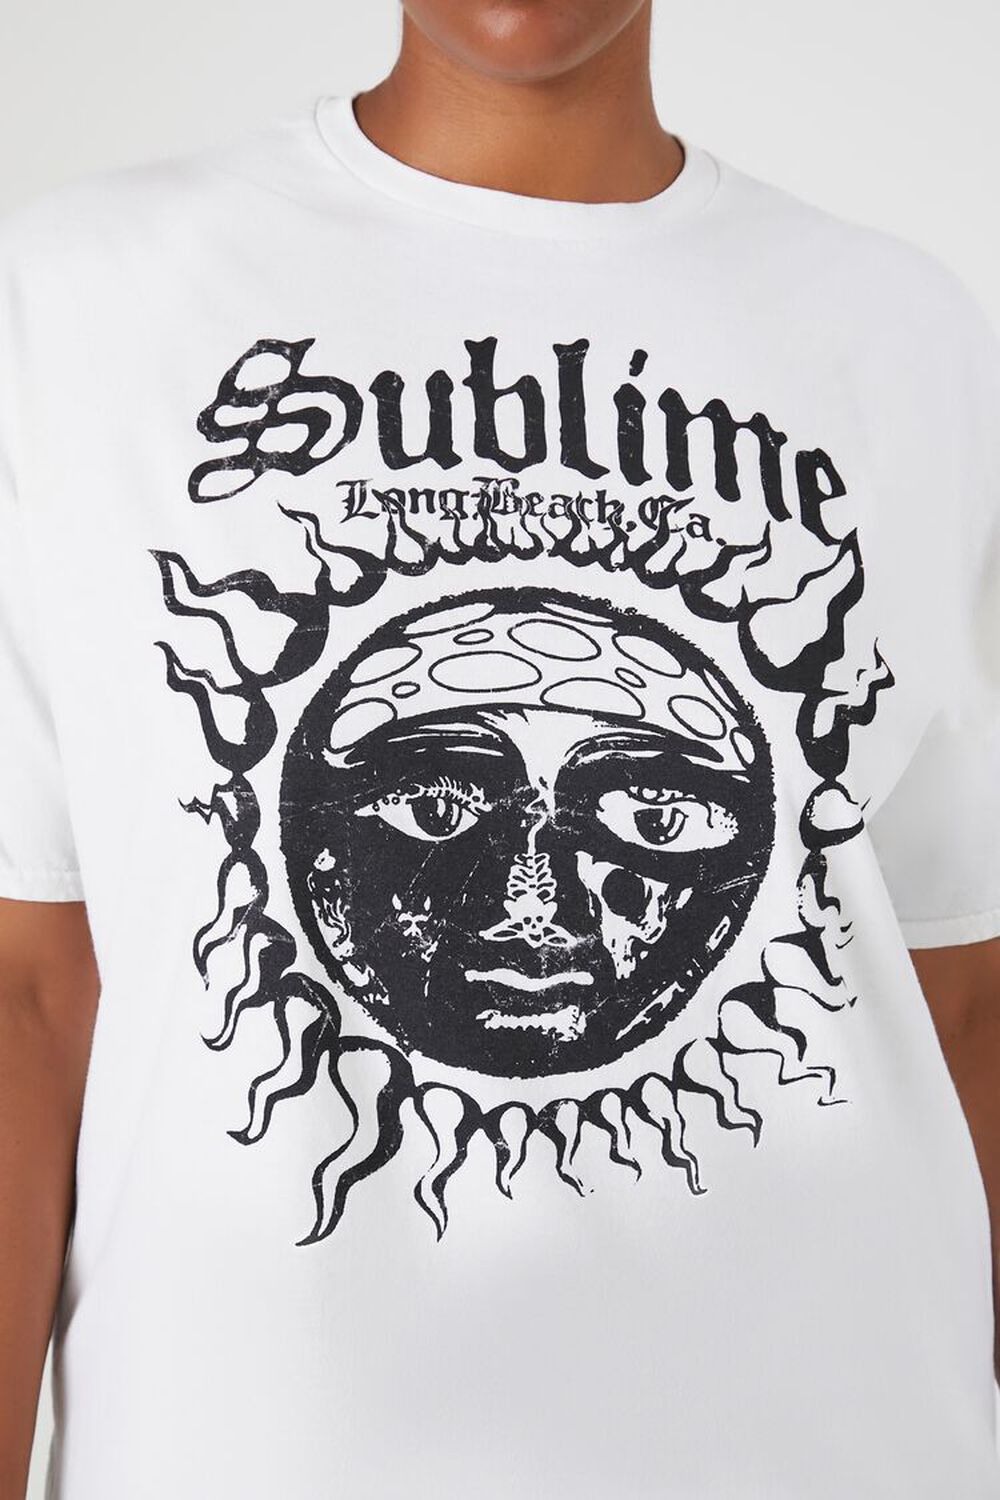 Sublime Shirt Mens Large Gray Crewneck T-shirt Graphic Band Tee